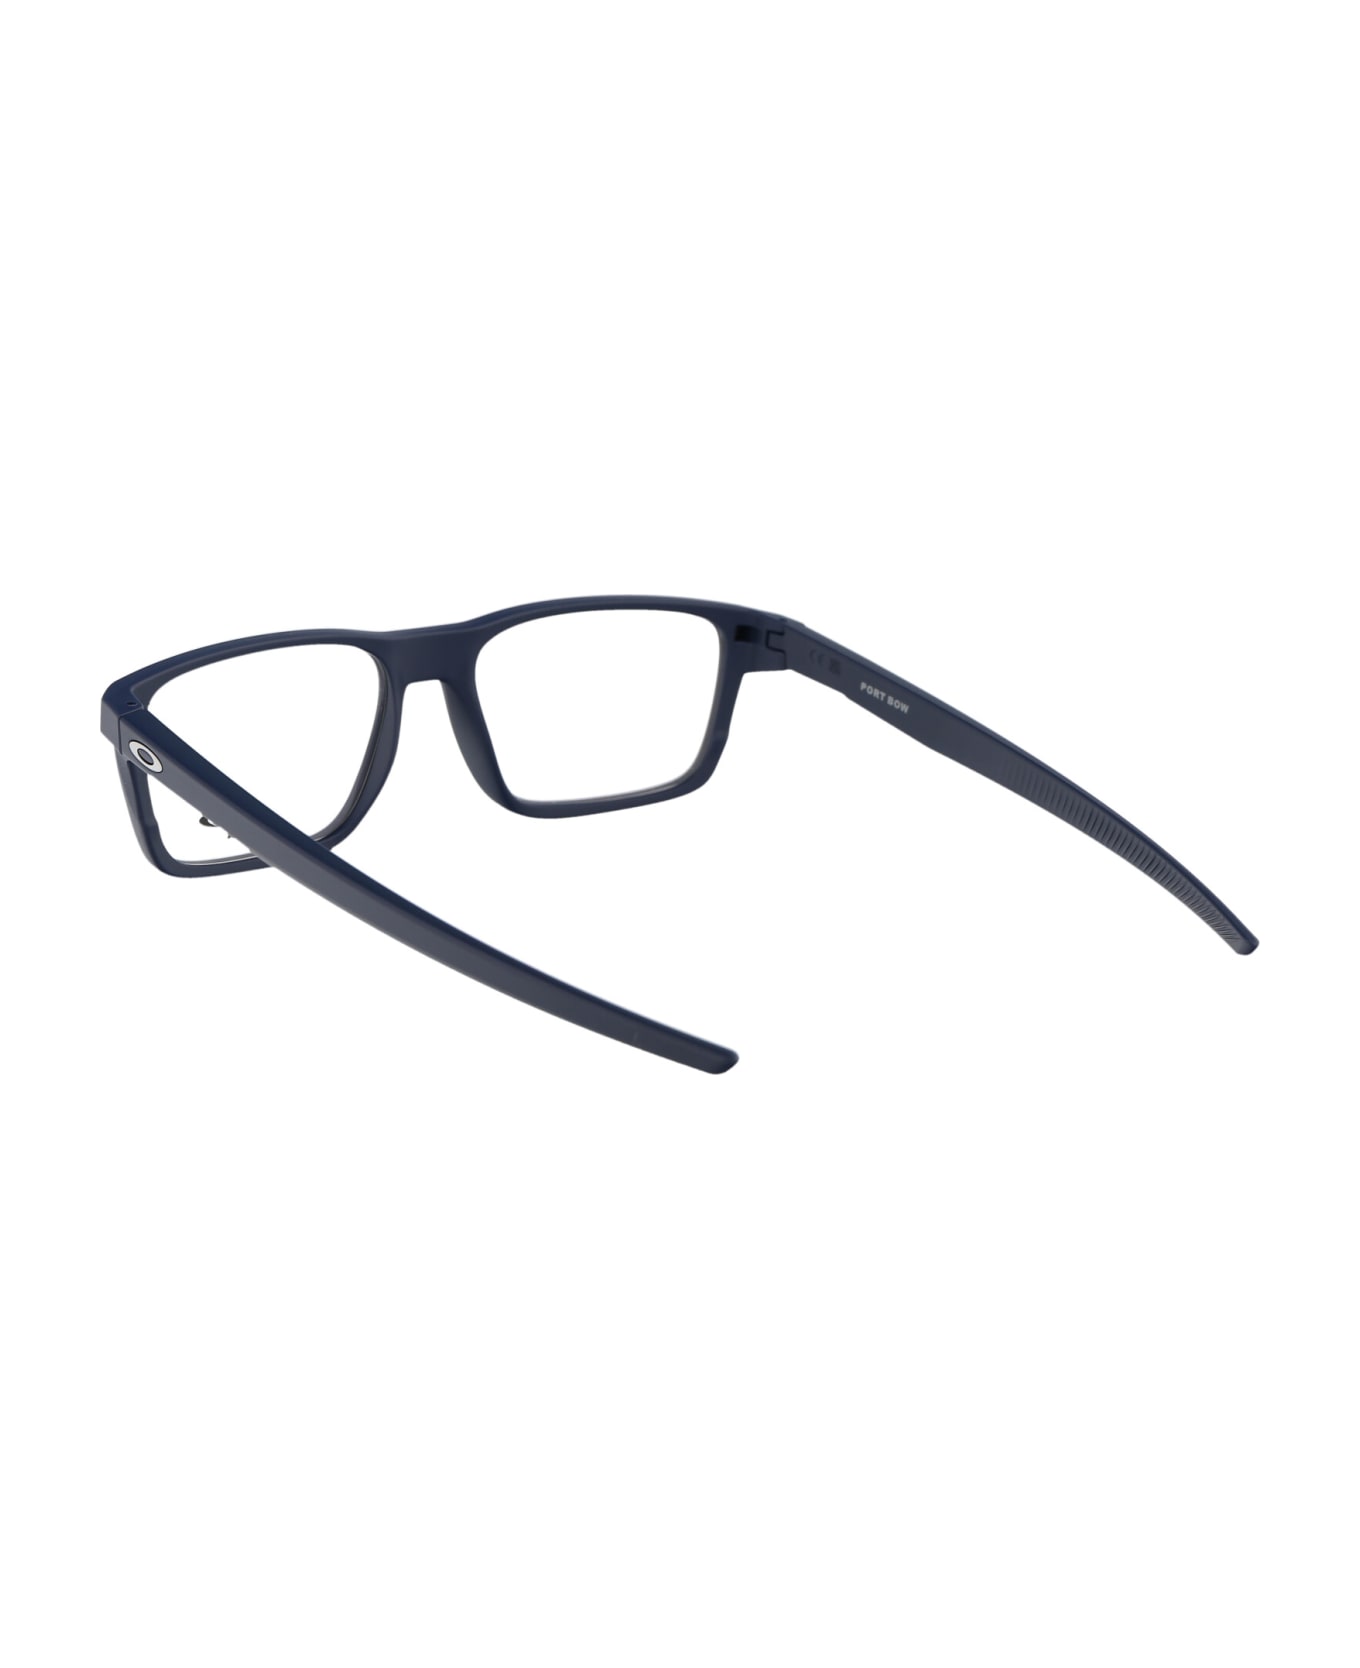 Oakley Port Bow Glasses - 816403 Universe Blue